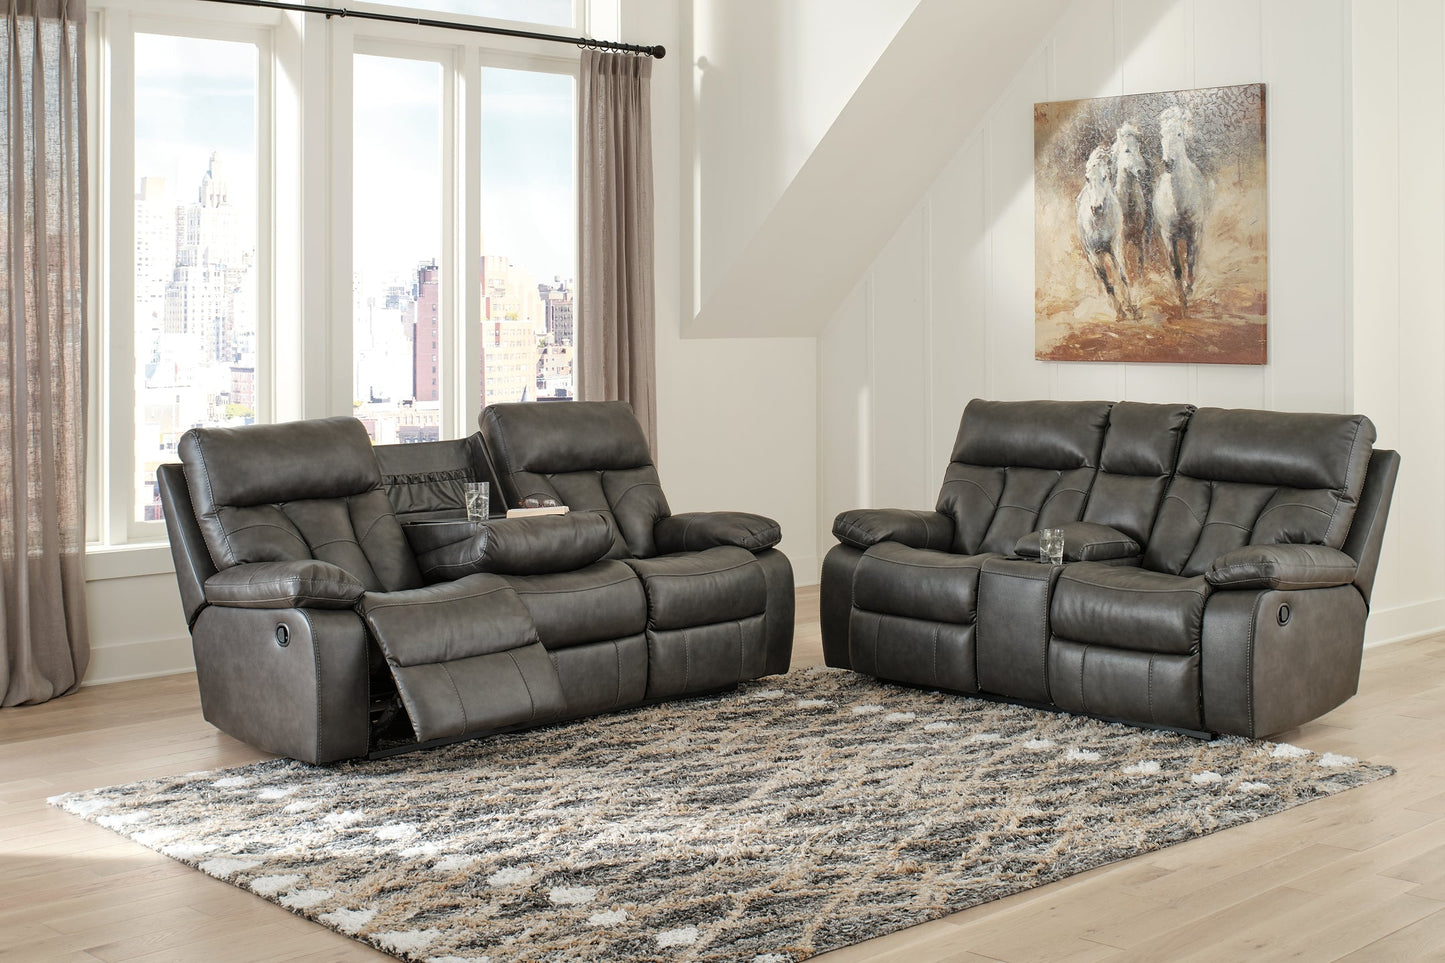 Willamen Sofa and Loveseat at Cloud 9 Mattress & Furniture furniture, home furnishing, home decor